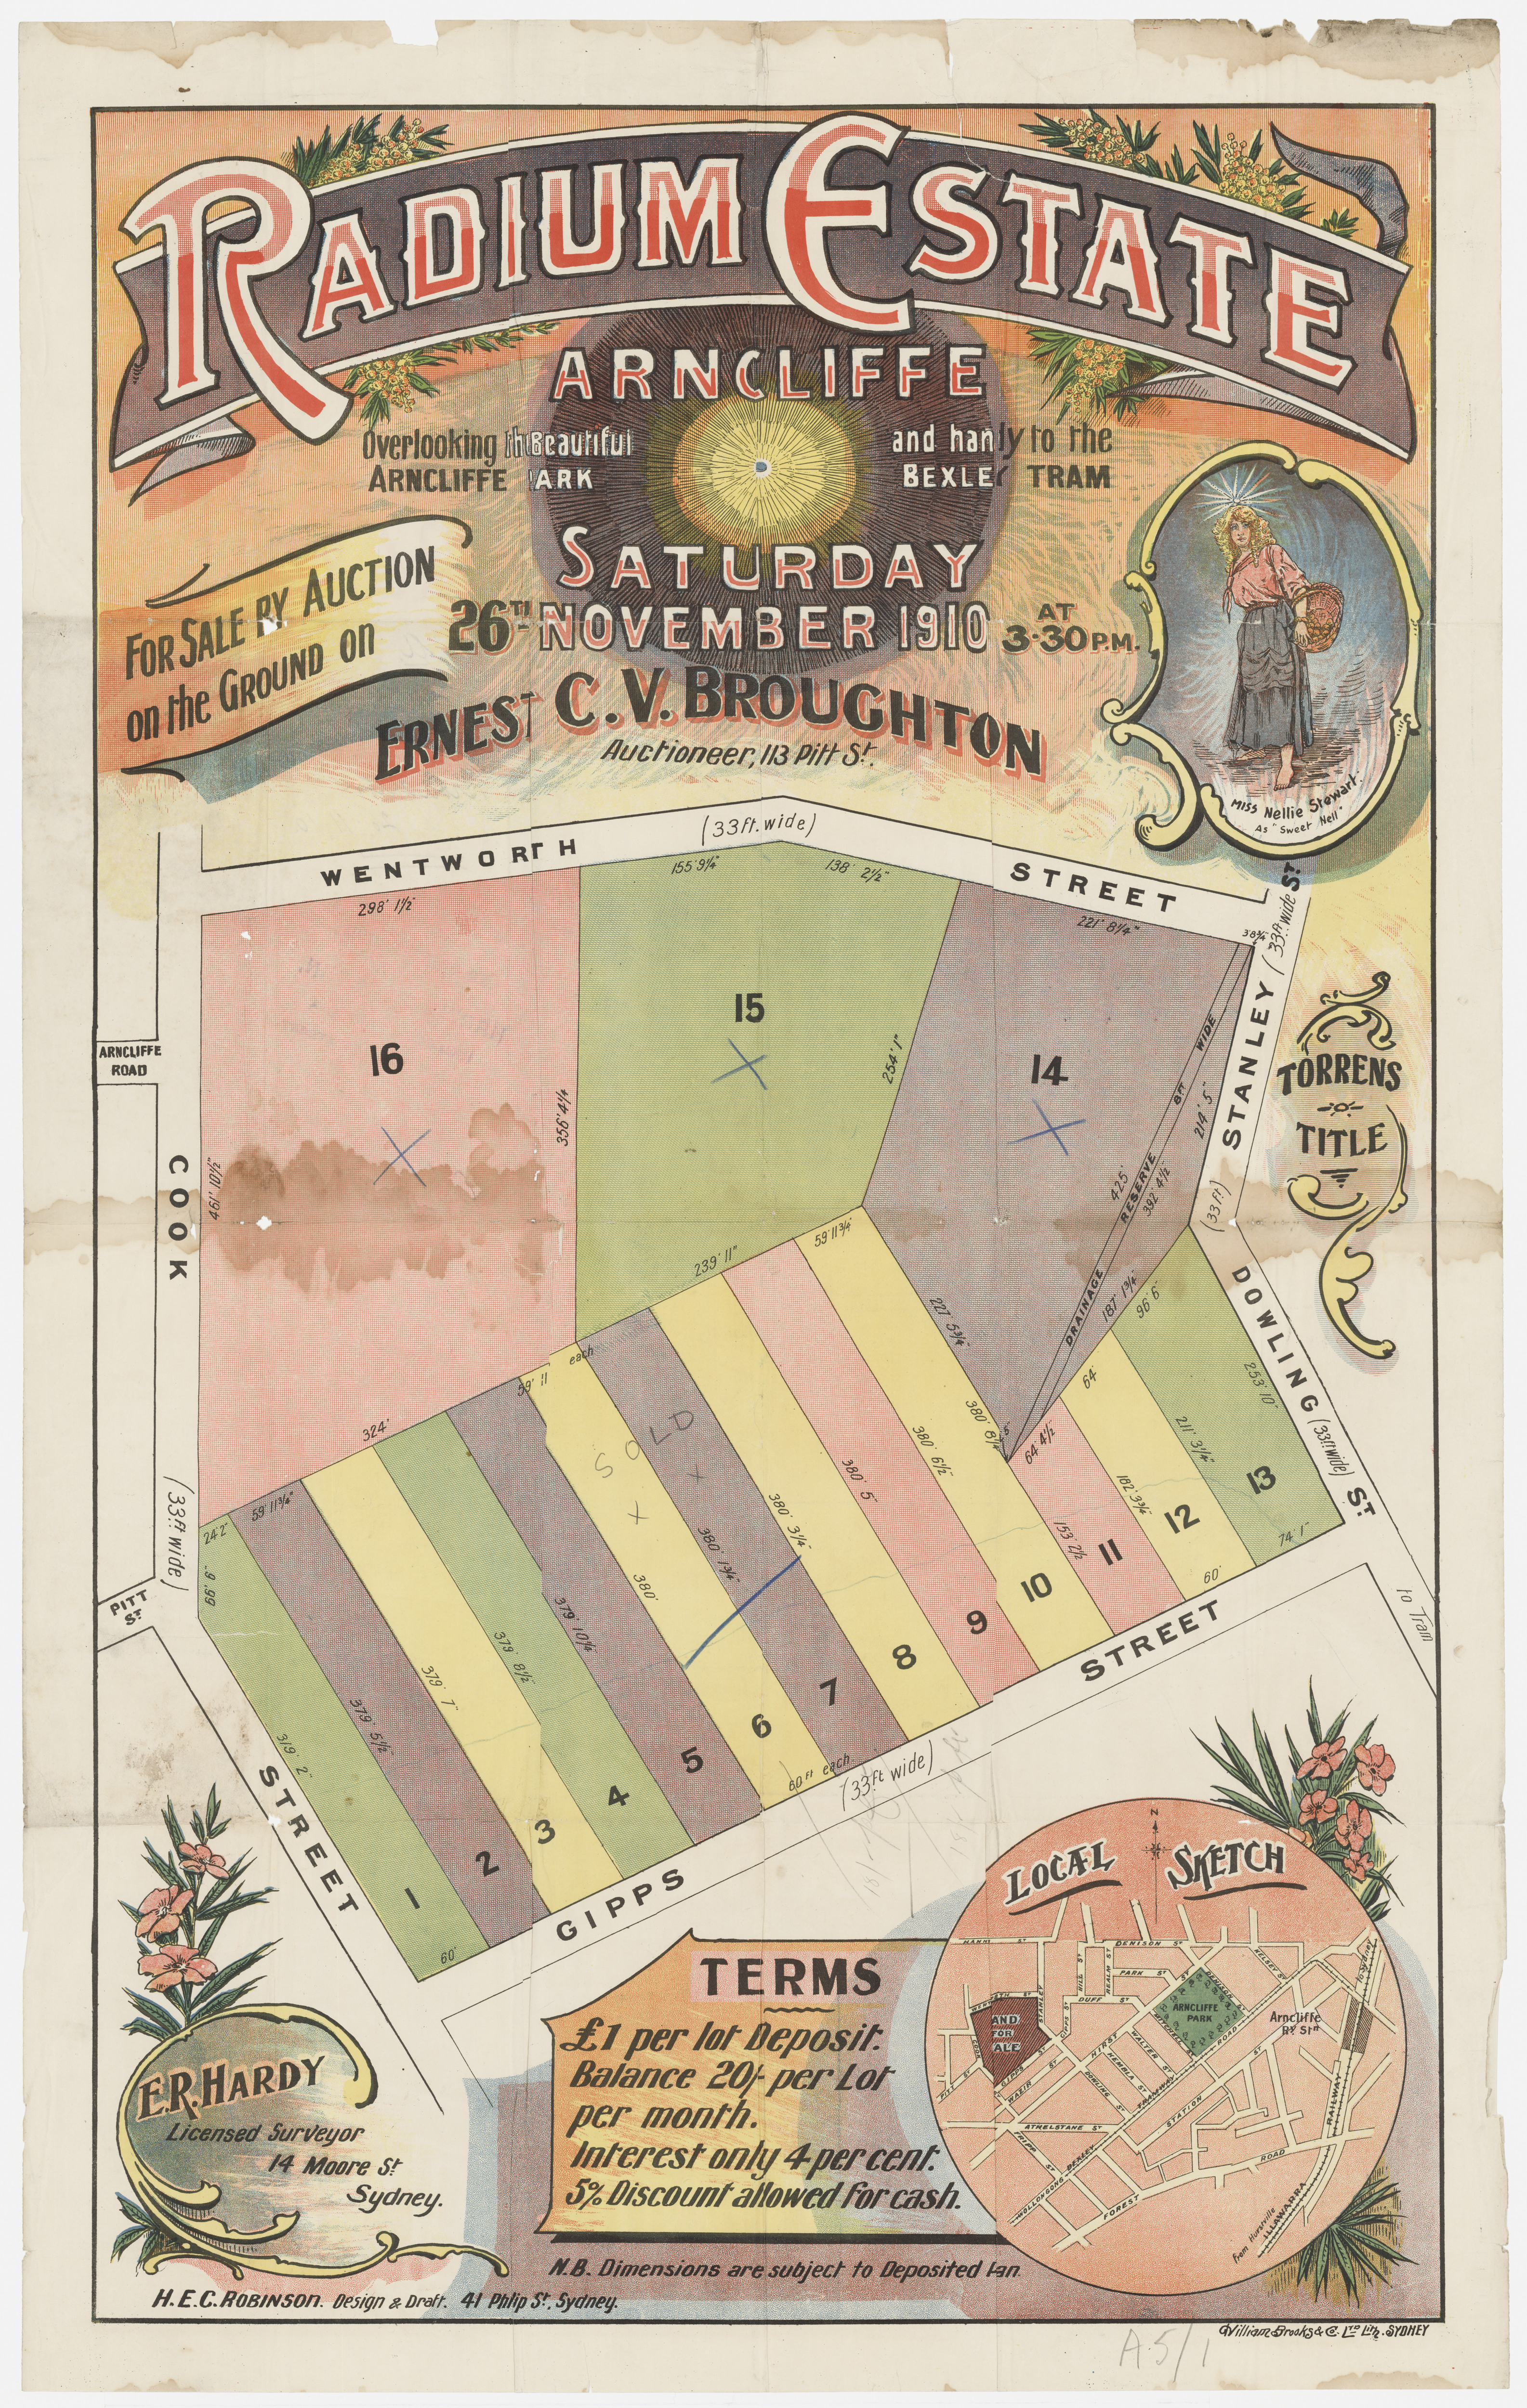 Subdivision Plan: 001 - Z/SP/A5/1 - Radium Estate Arncliffe - Gipps St, 1910